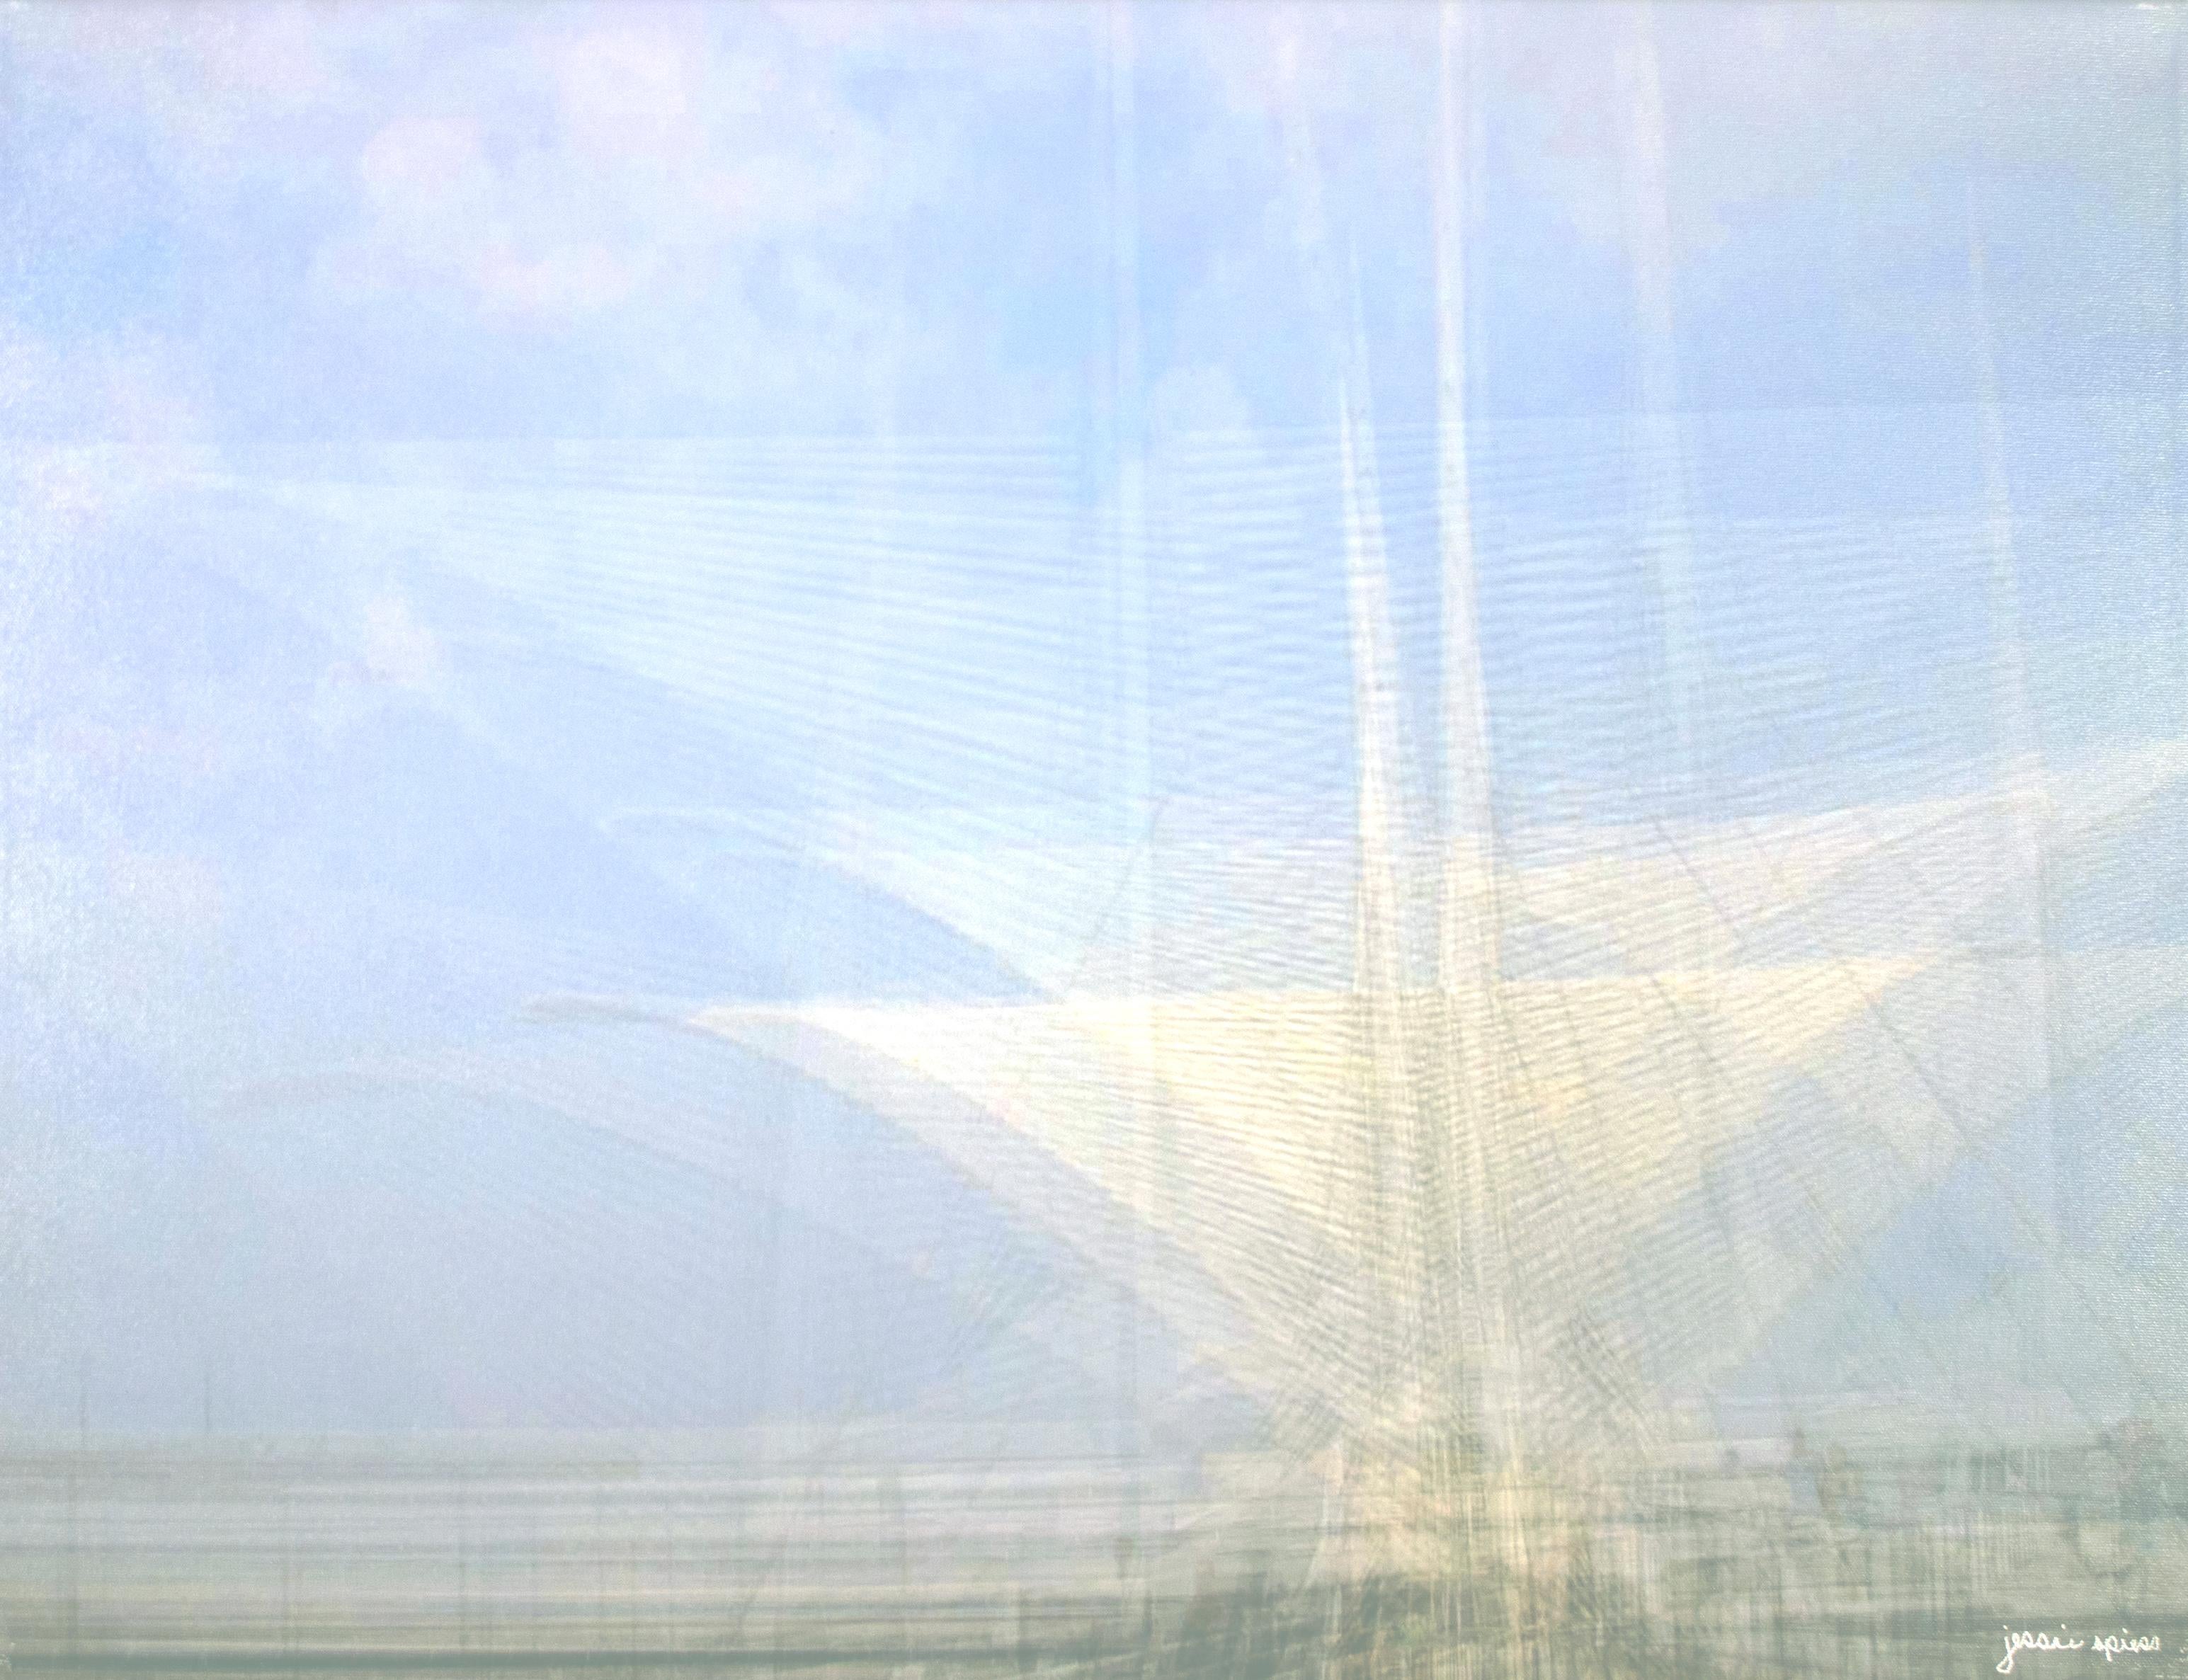 'Impressions of Calatrava II' original photograph signed by Jessie Spiess